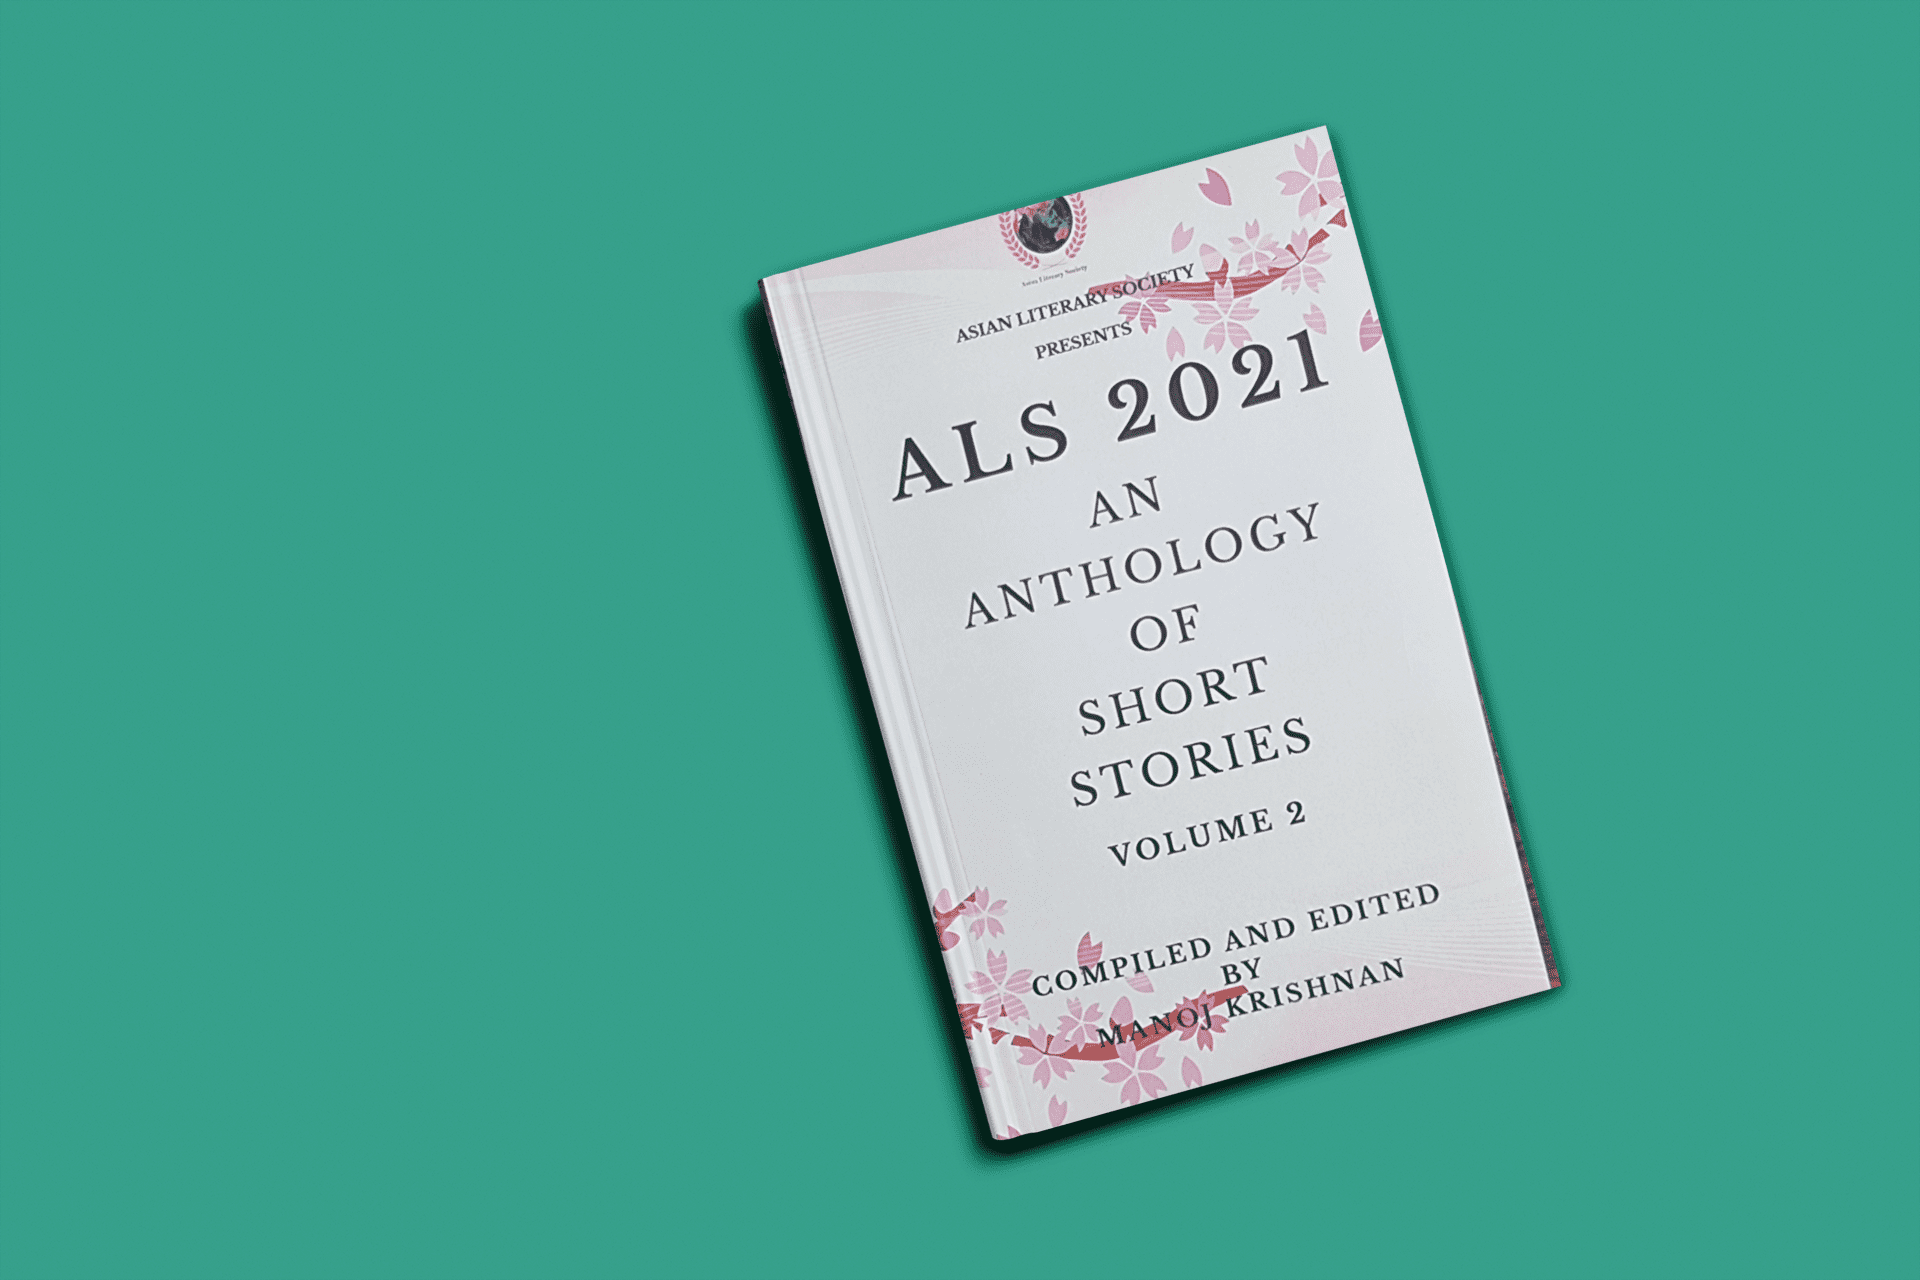 ALS 2021 An Anthology of Short Stories